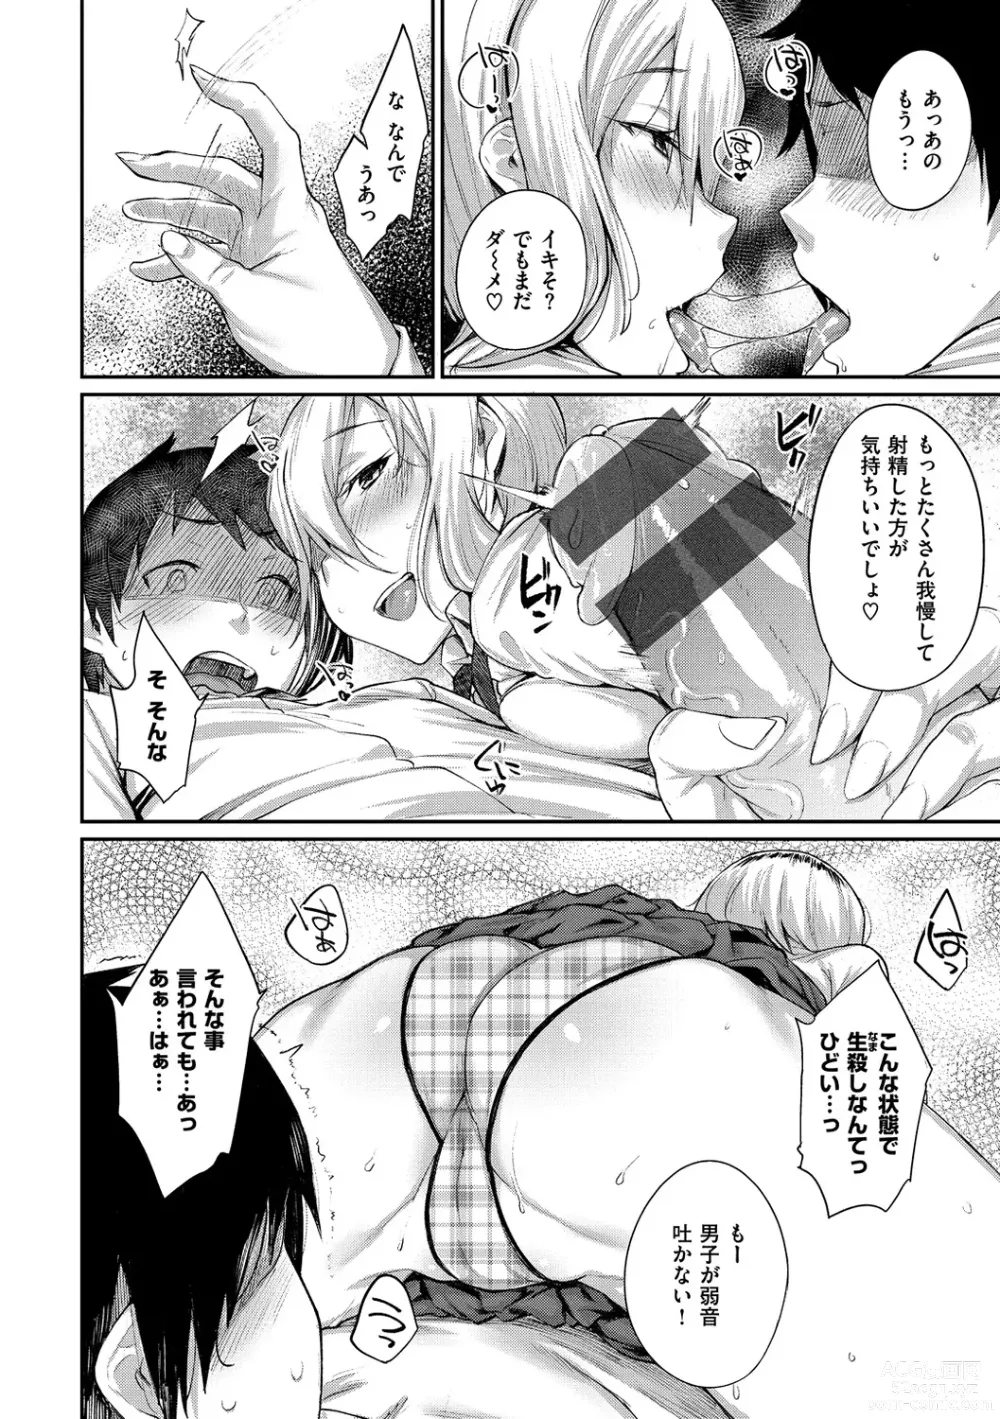 Page 43 of manga Himitsu no Decoration